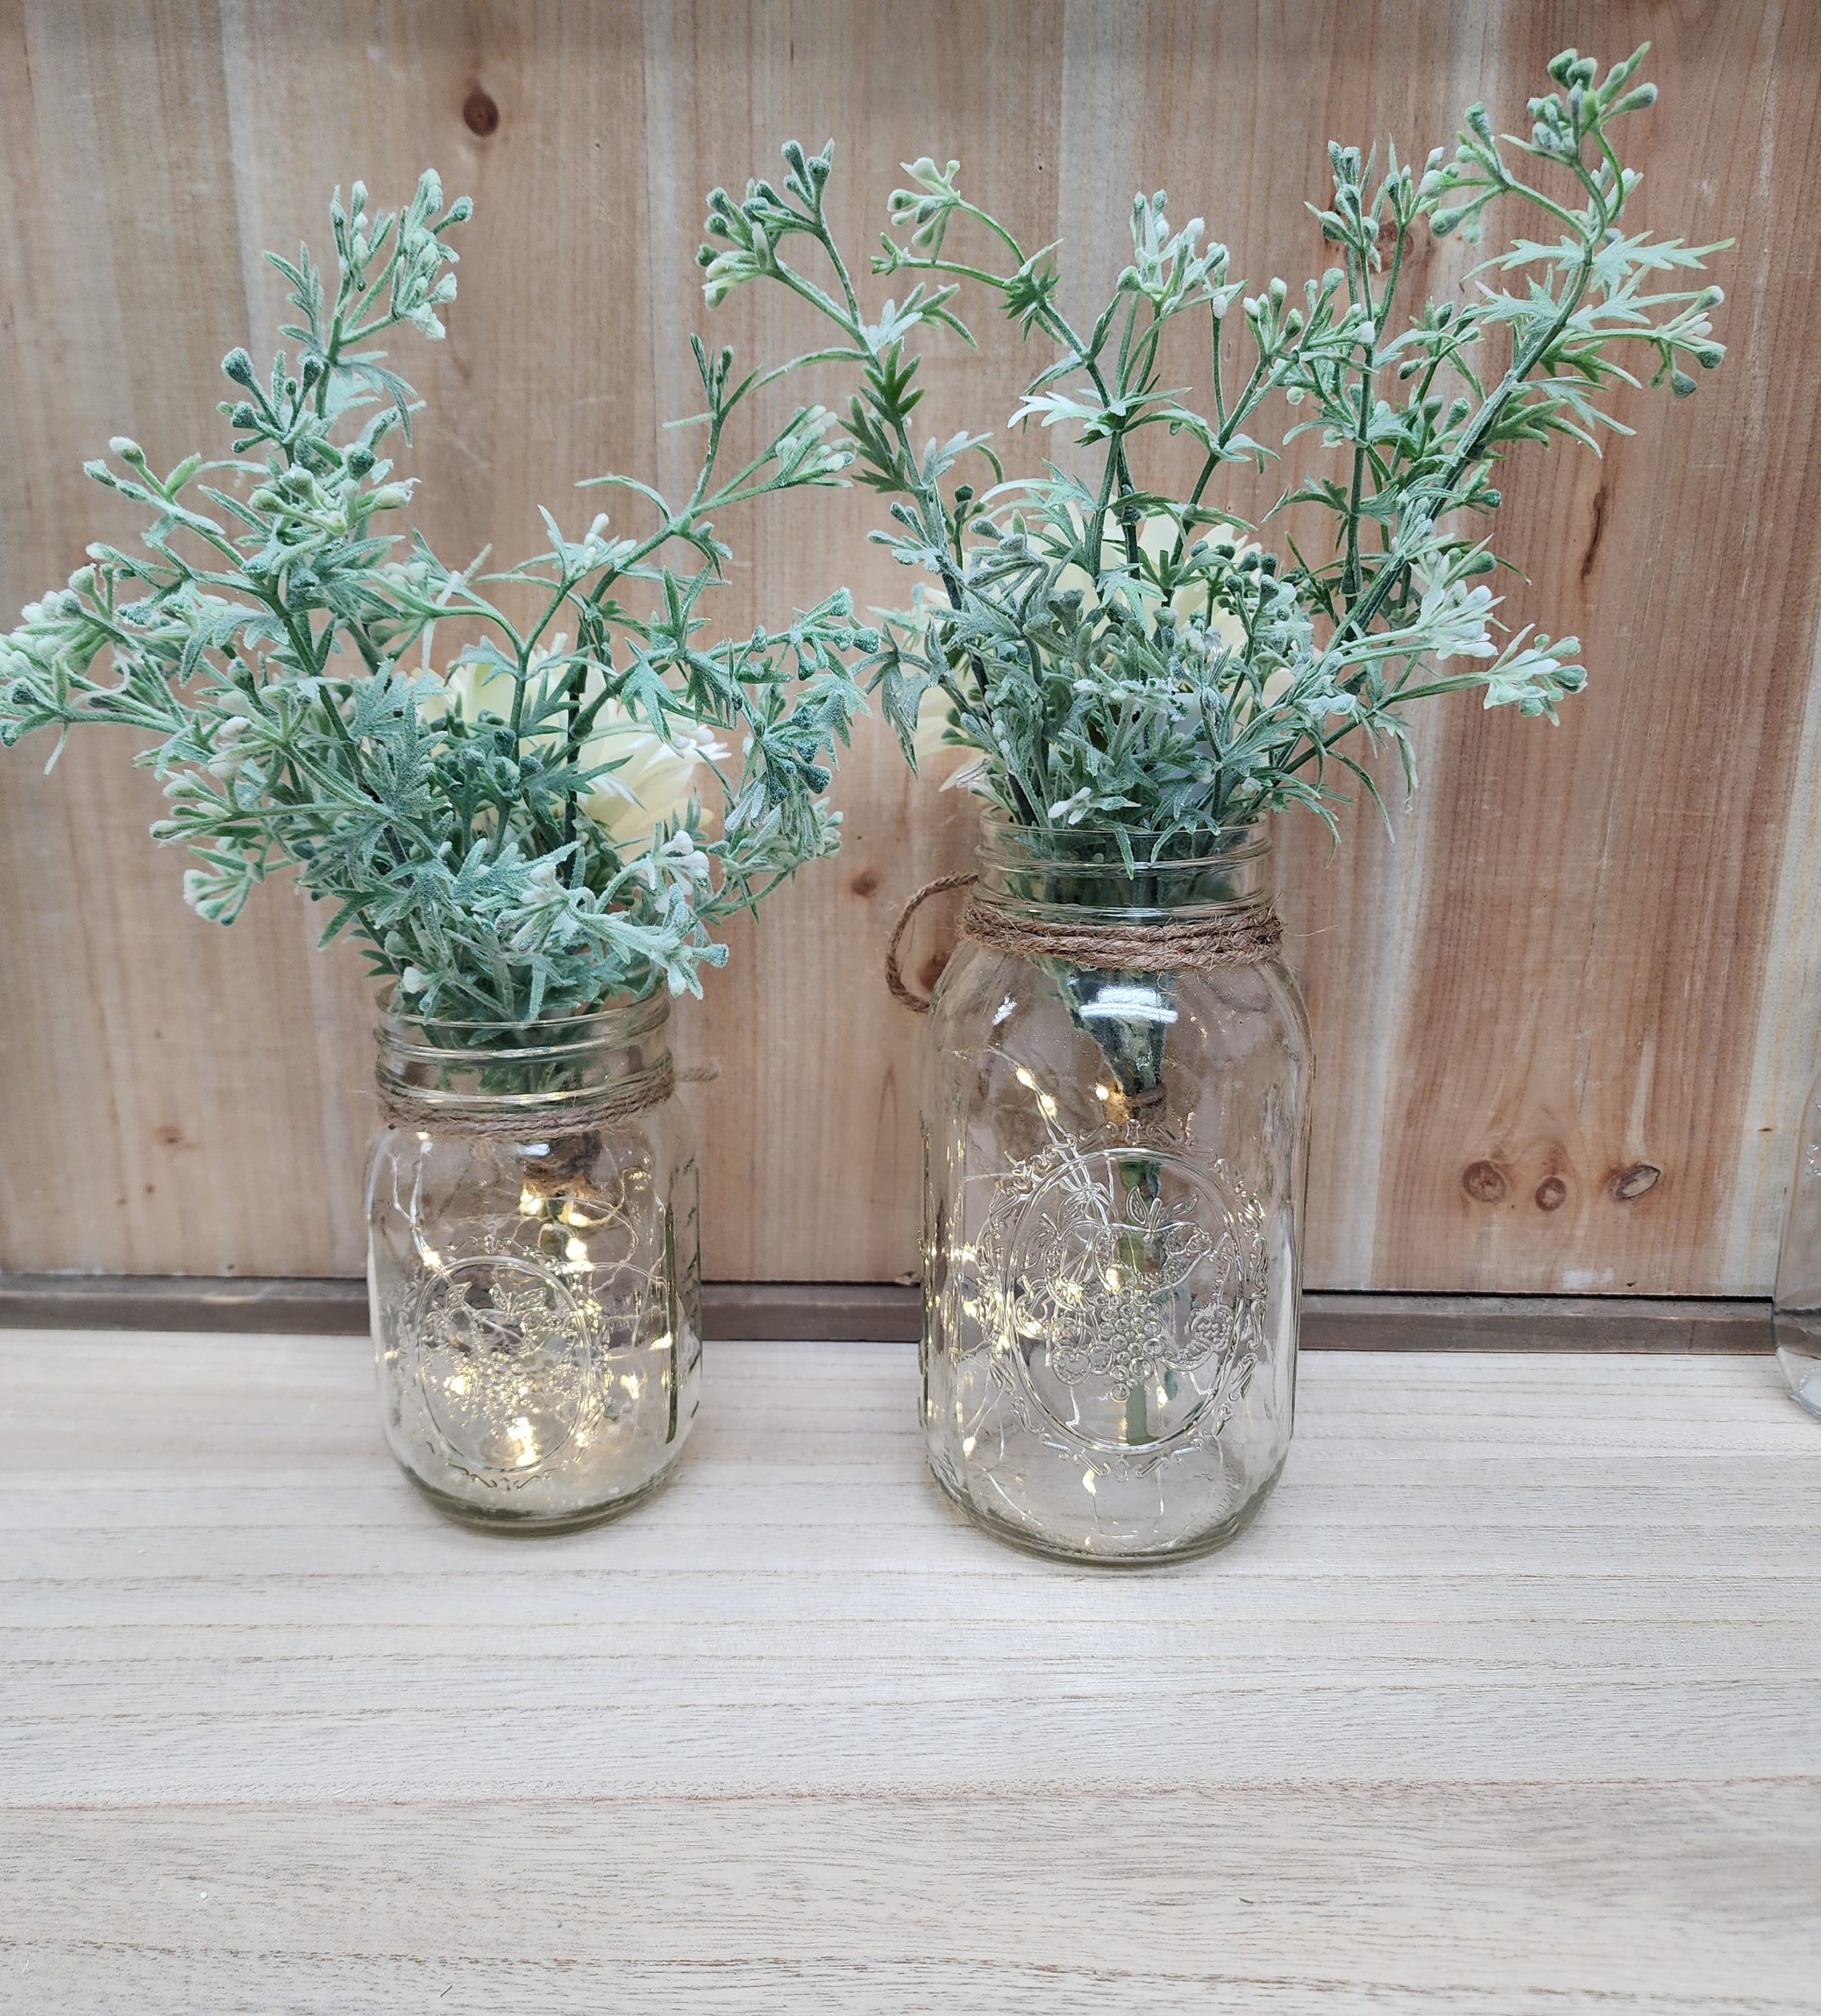 Lavender and Eucalyptus Lighted Mason Jar Centerpiece, Wedding